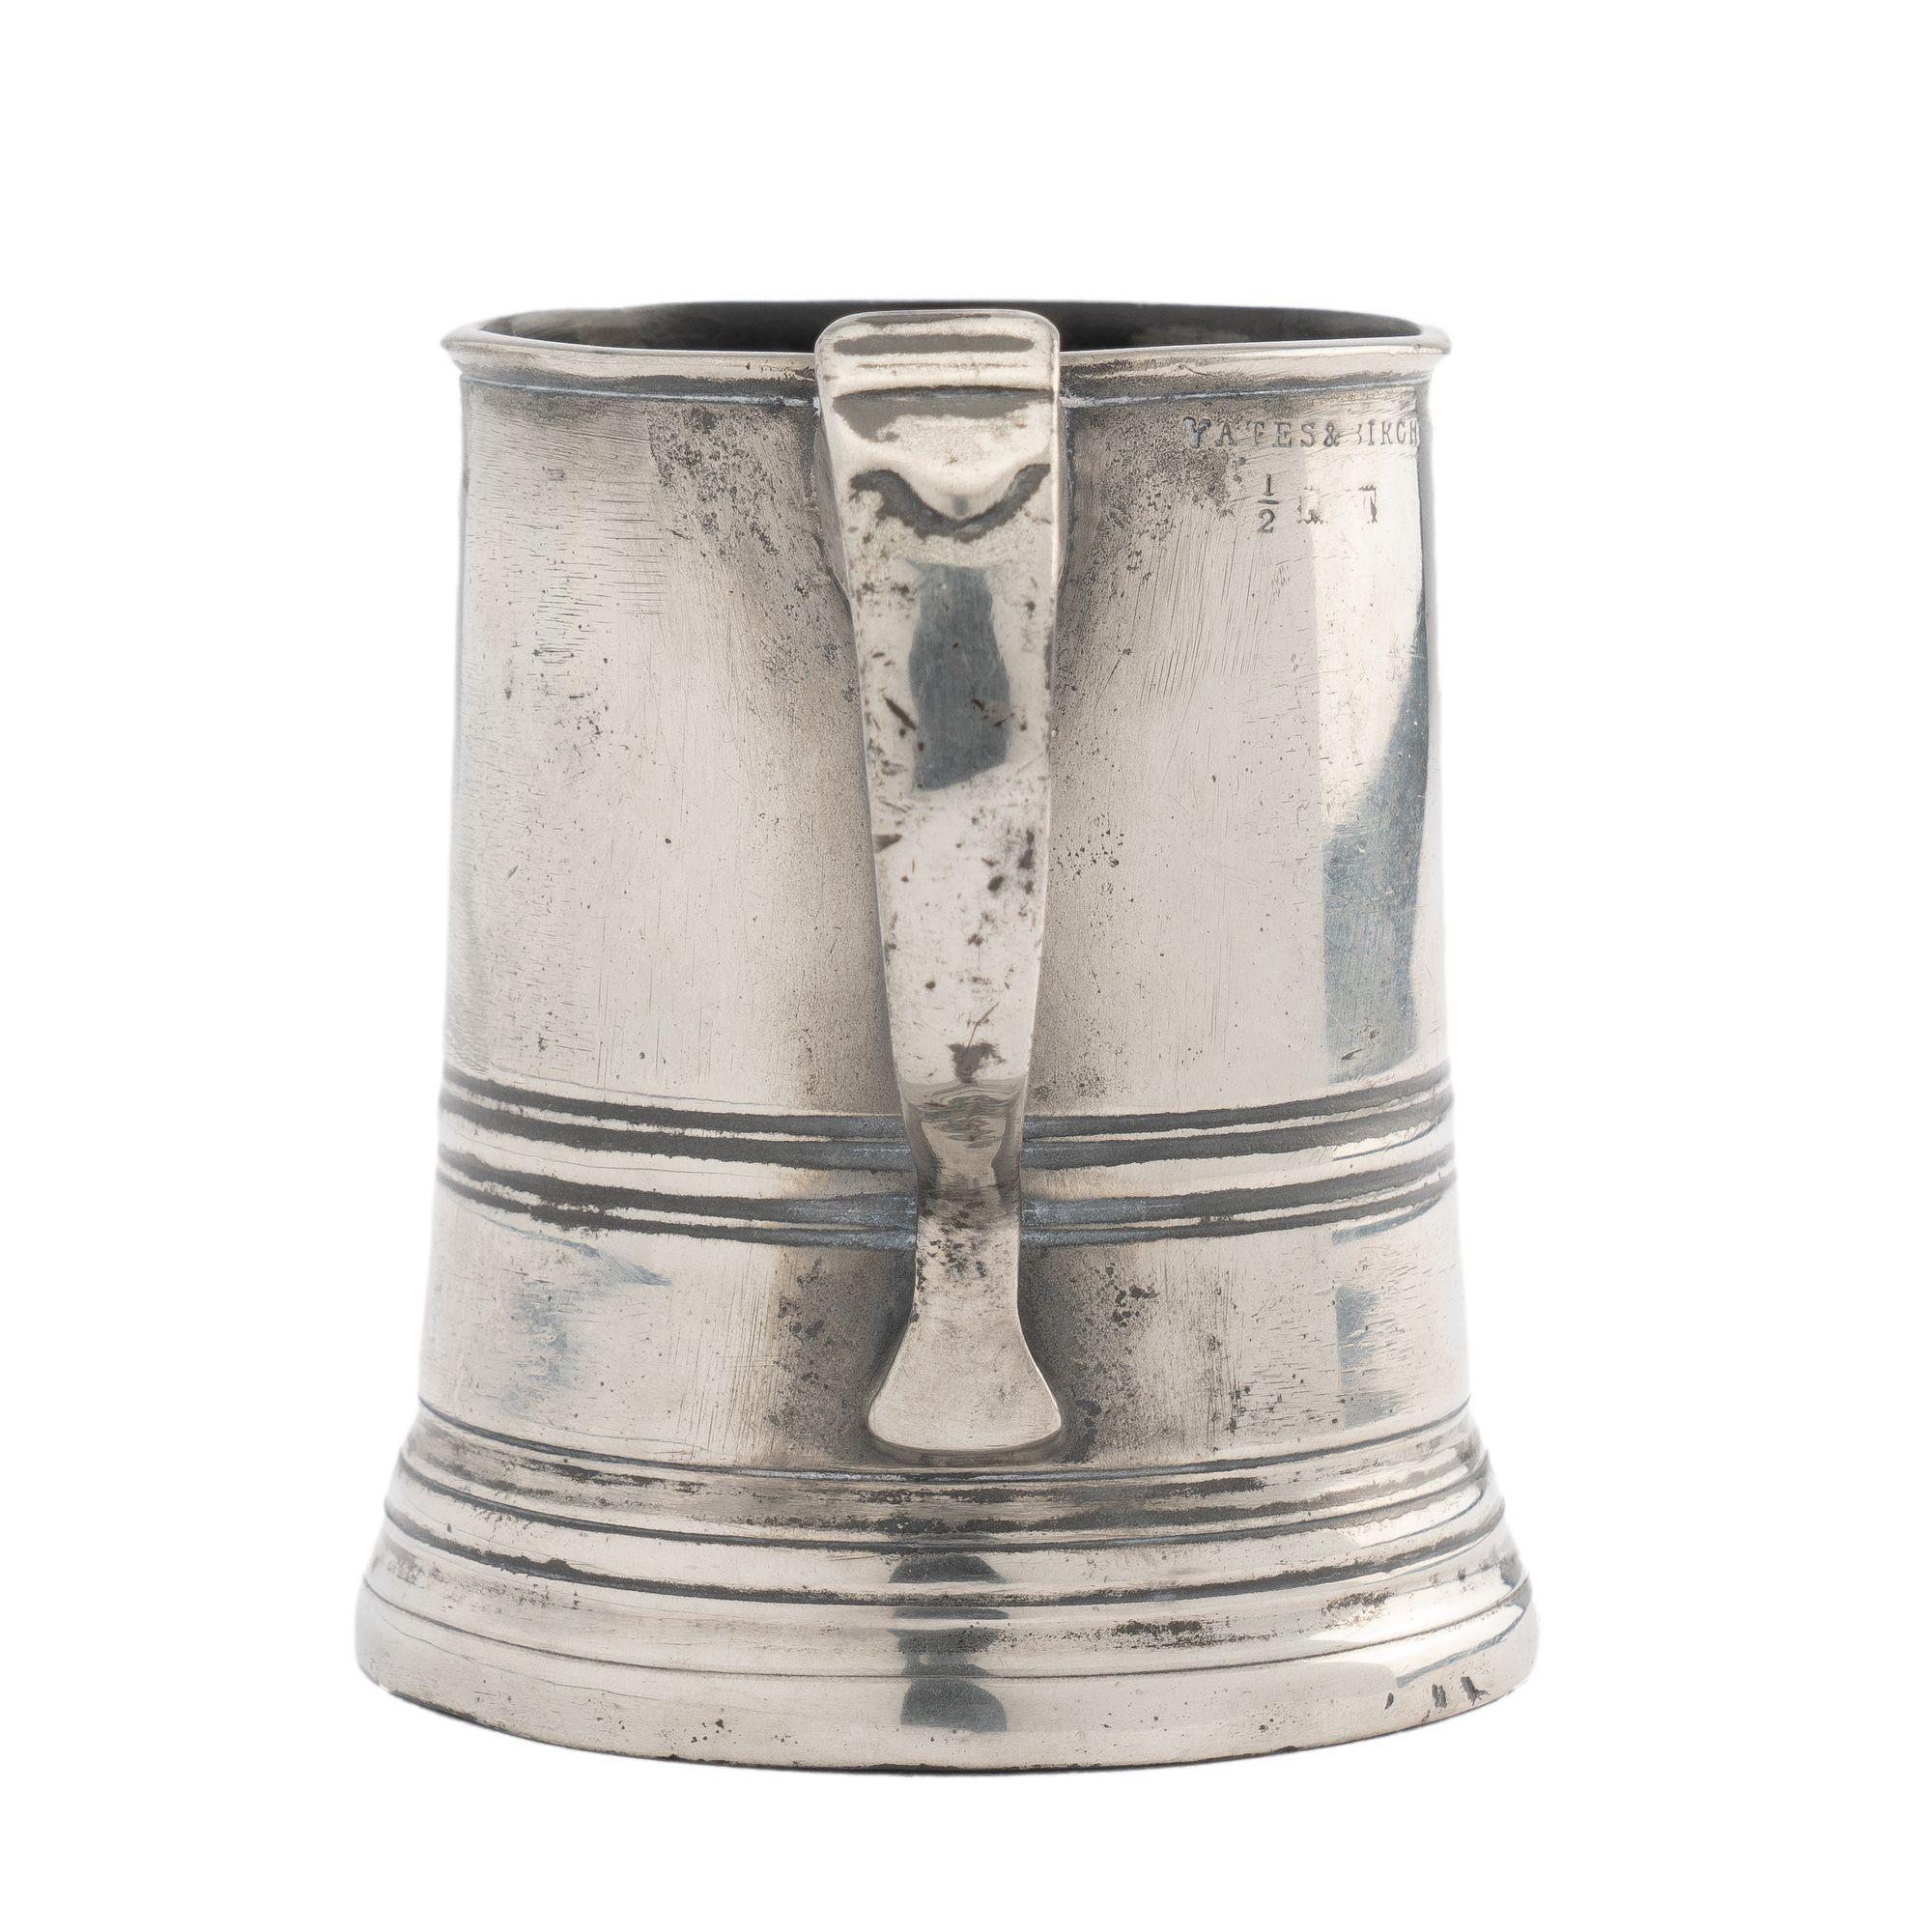 Yates & Birch Pewter Half Pint Mug, 1839-1860 In Good Condition For Sale In Kenilworth, IL